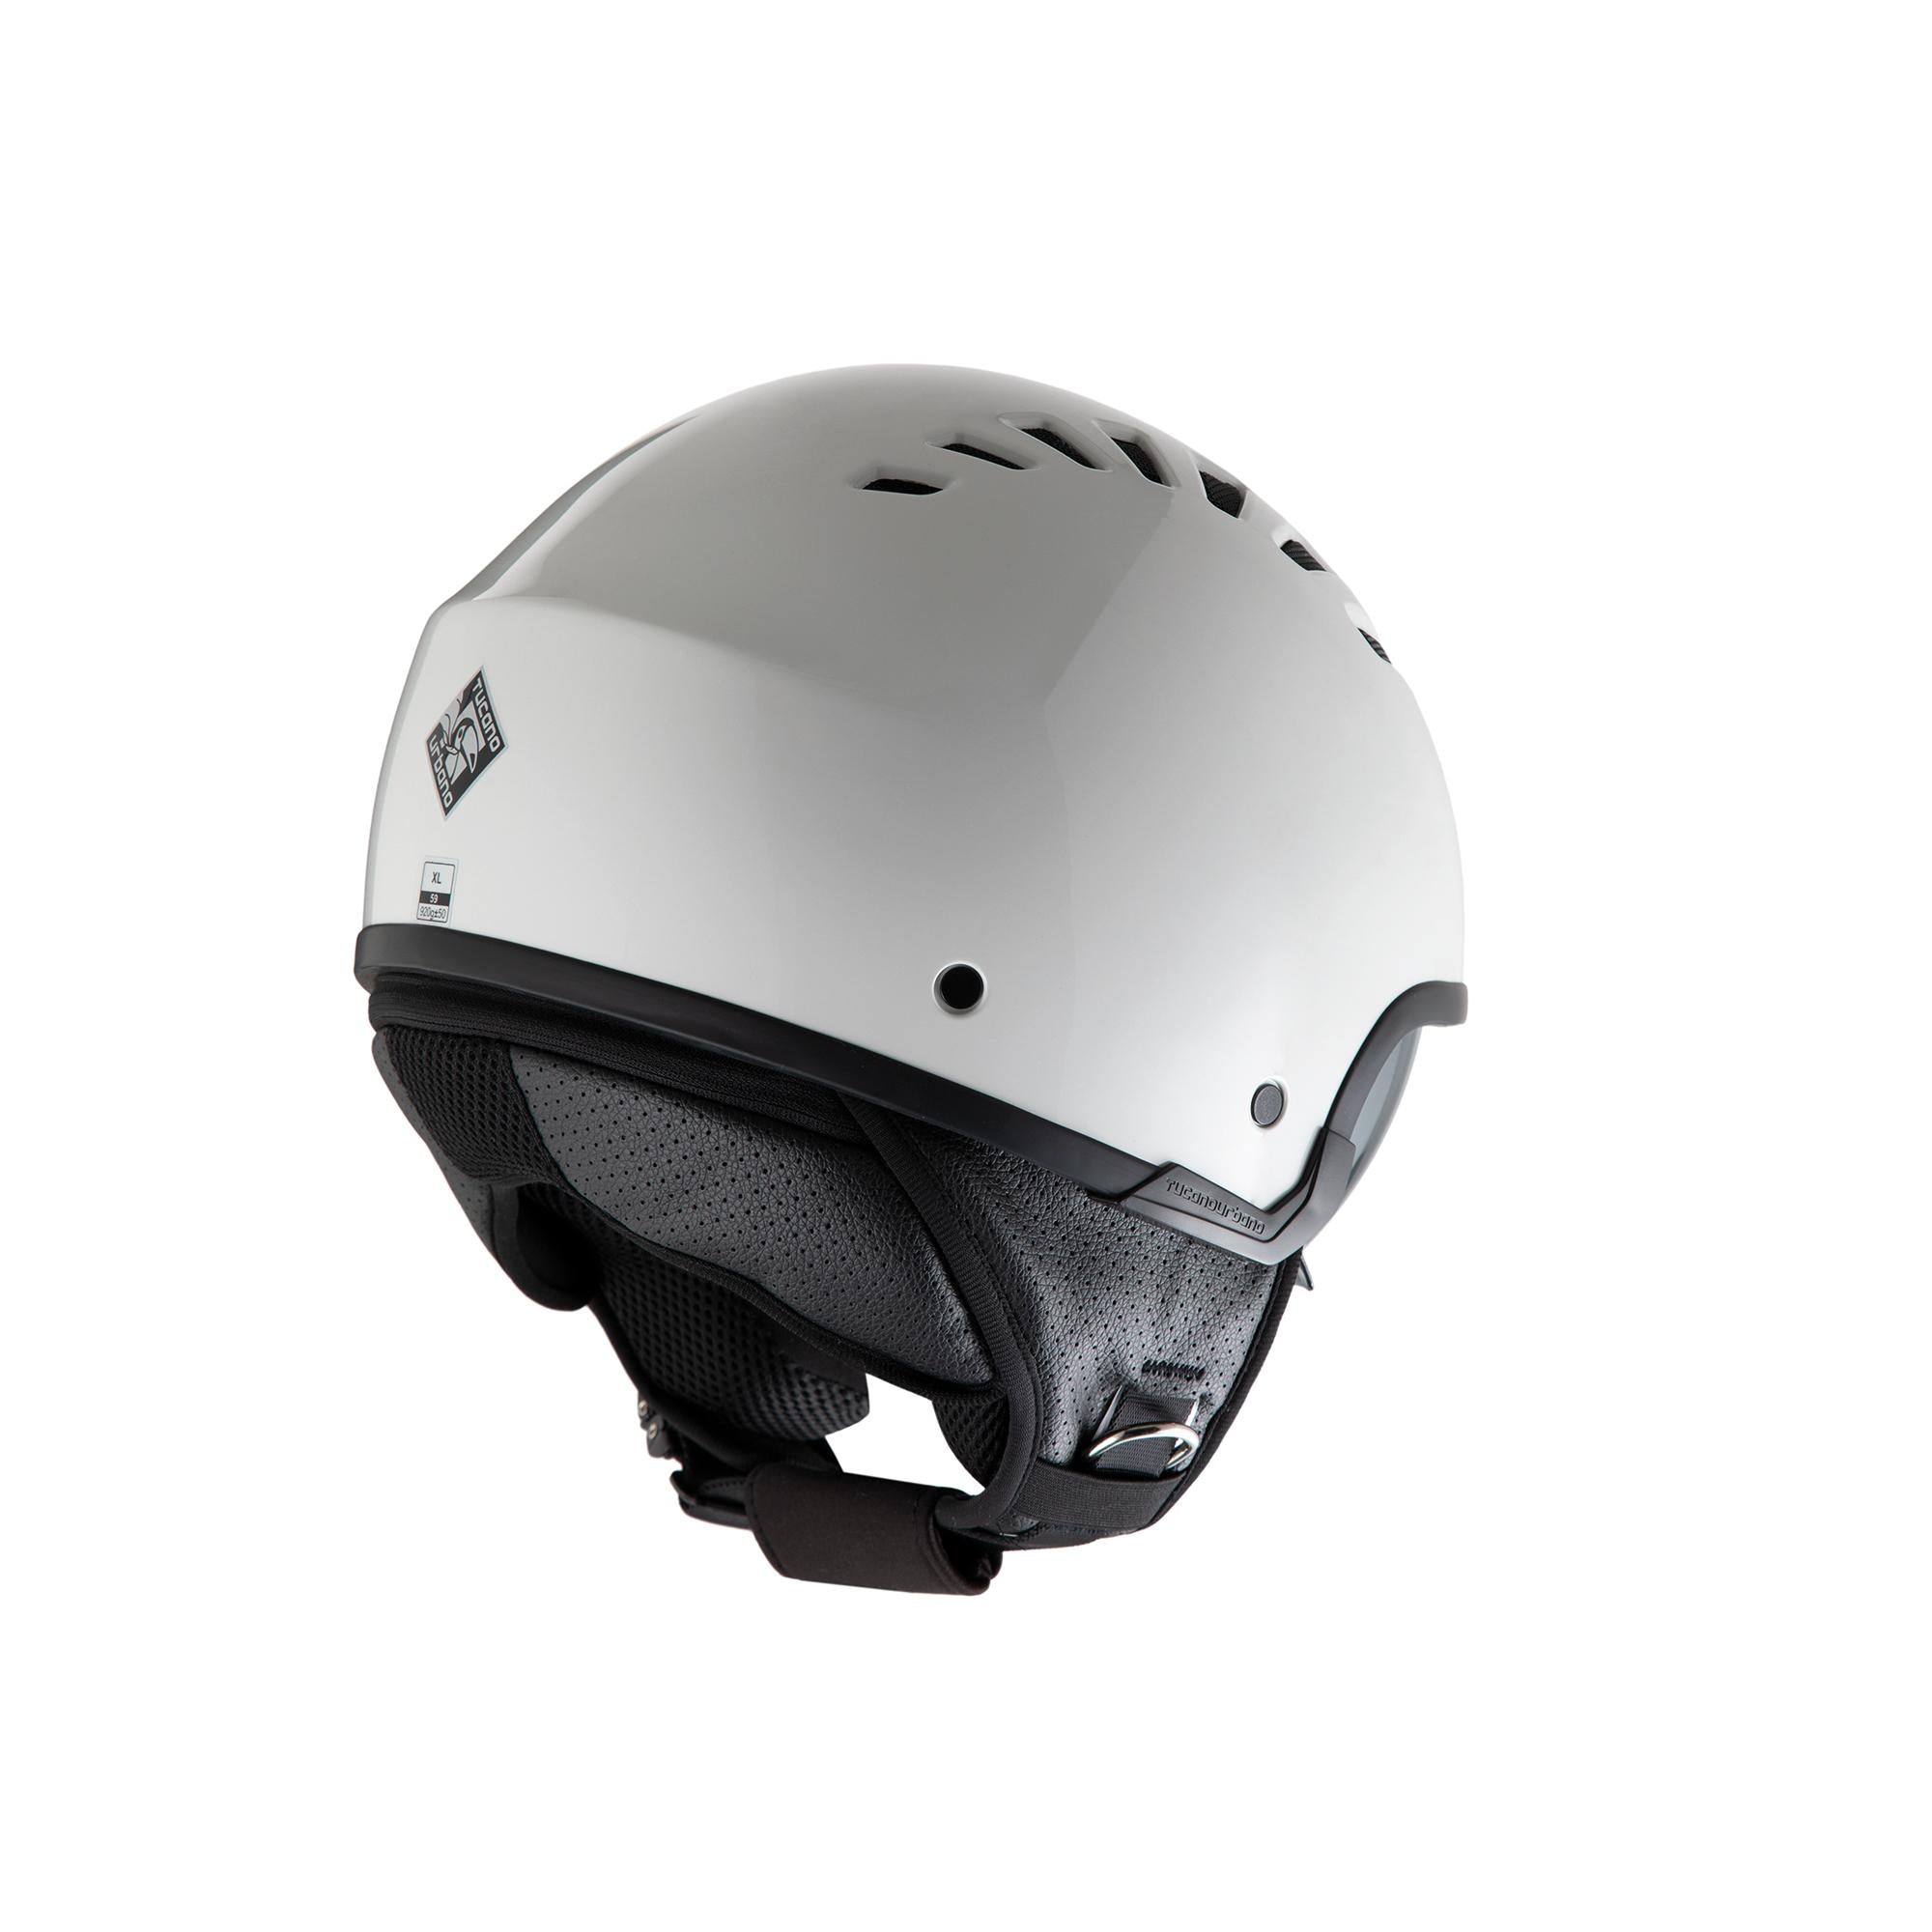 TUCANO URBANO Helmet EL'FLESH glossy ice white